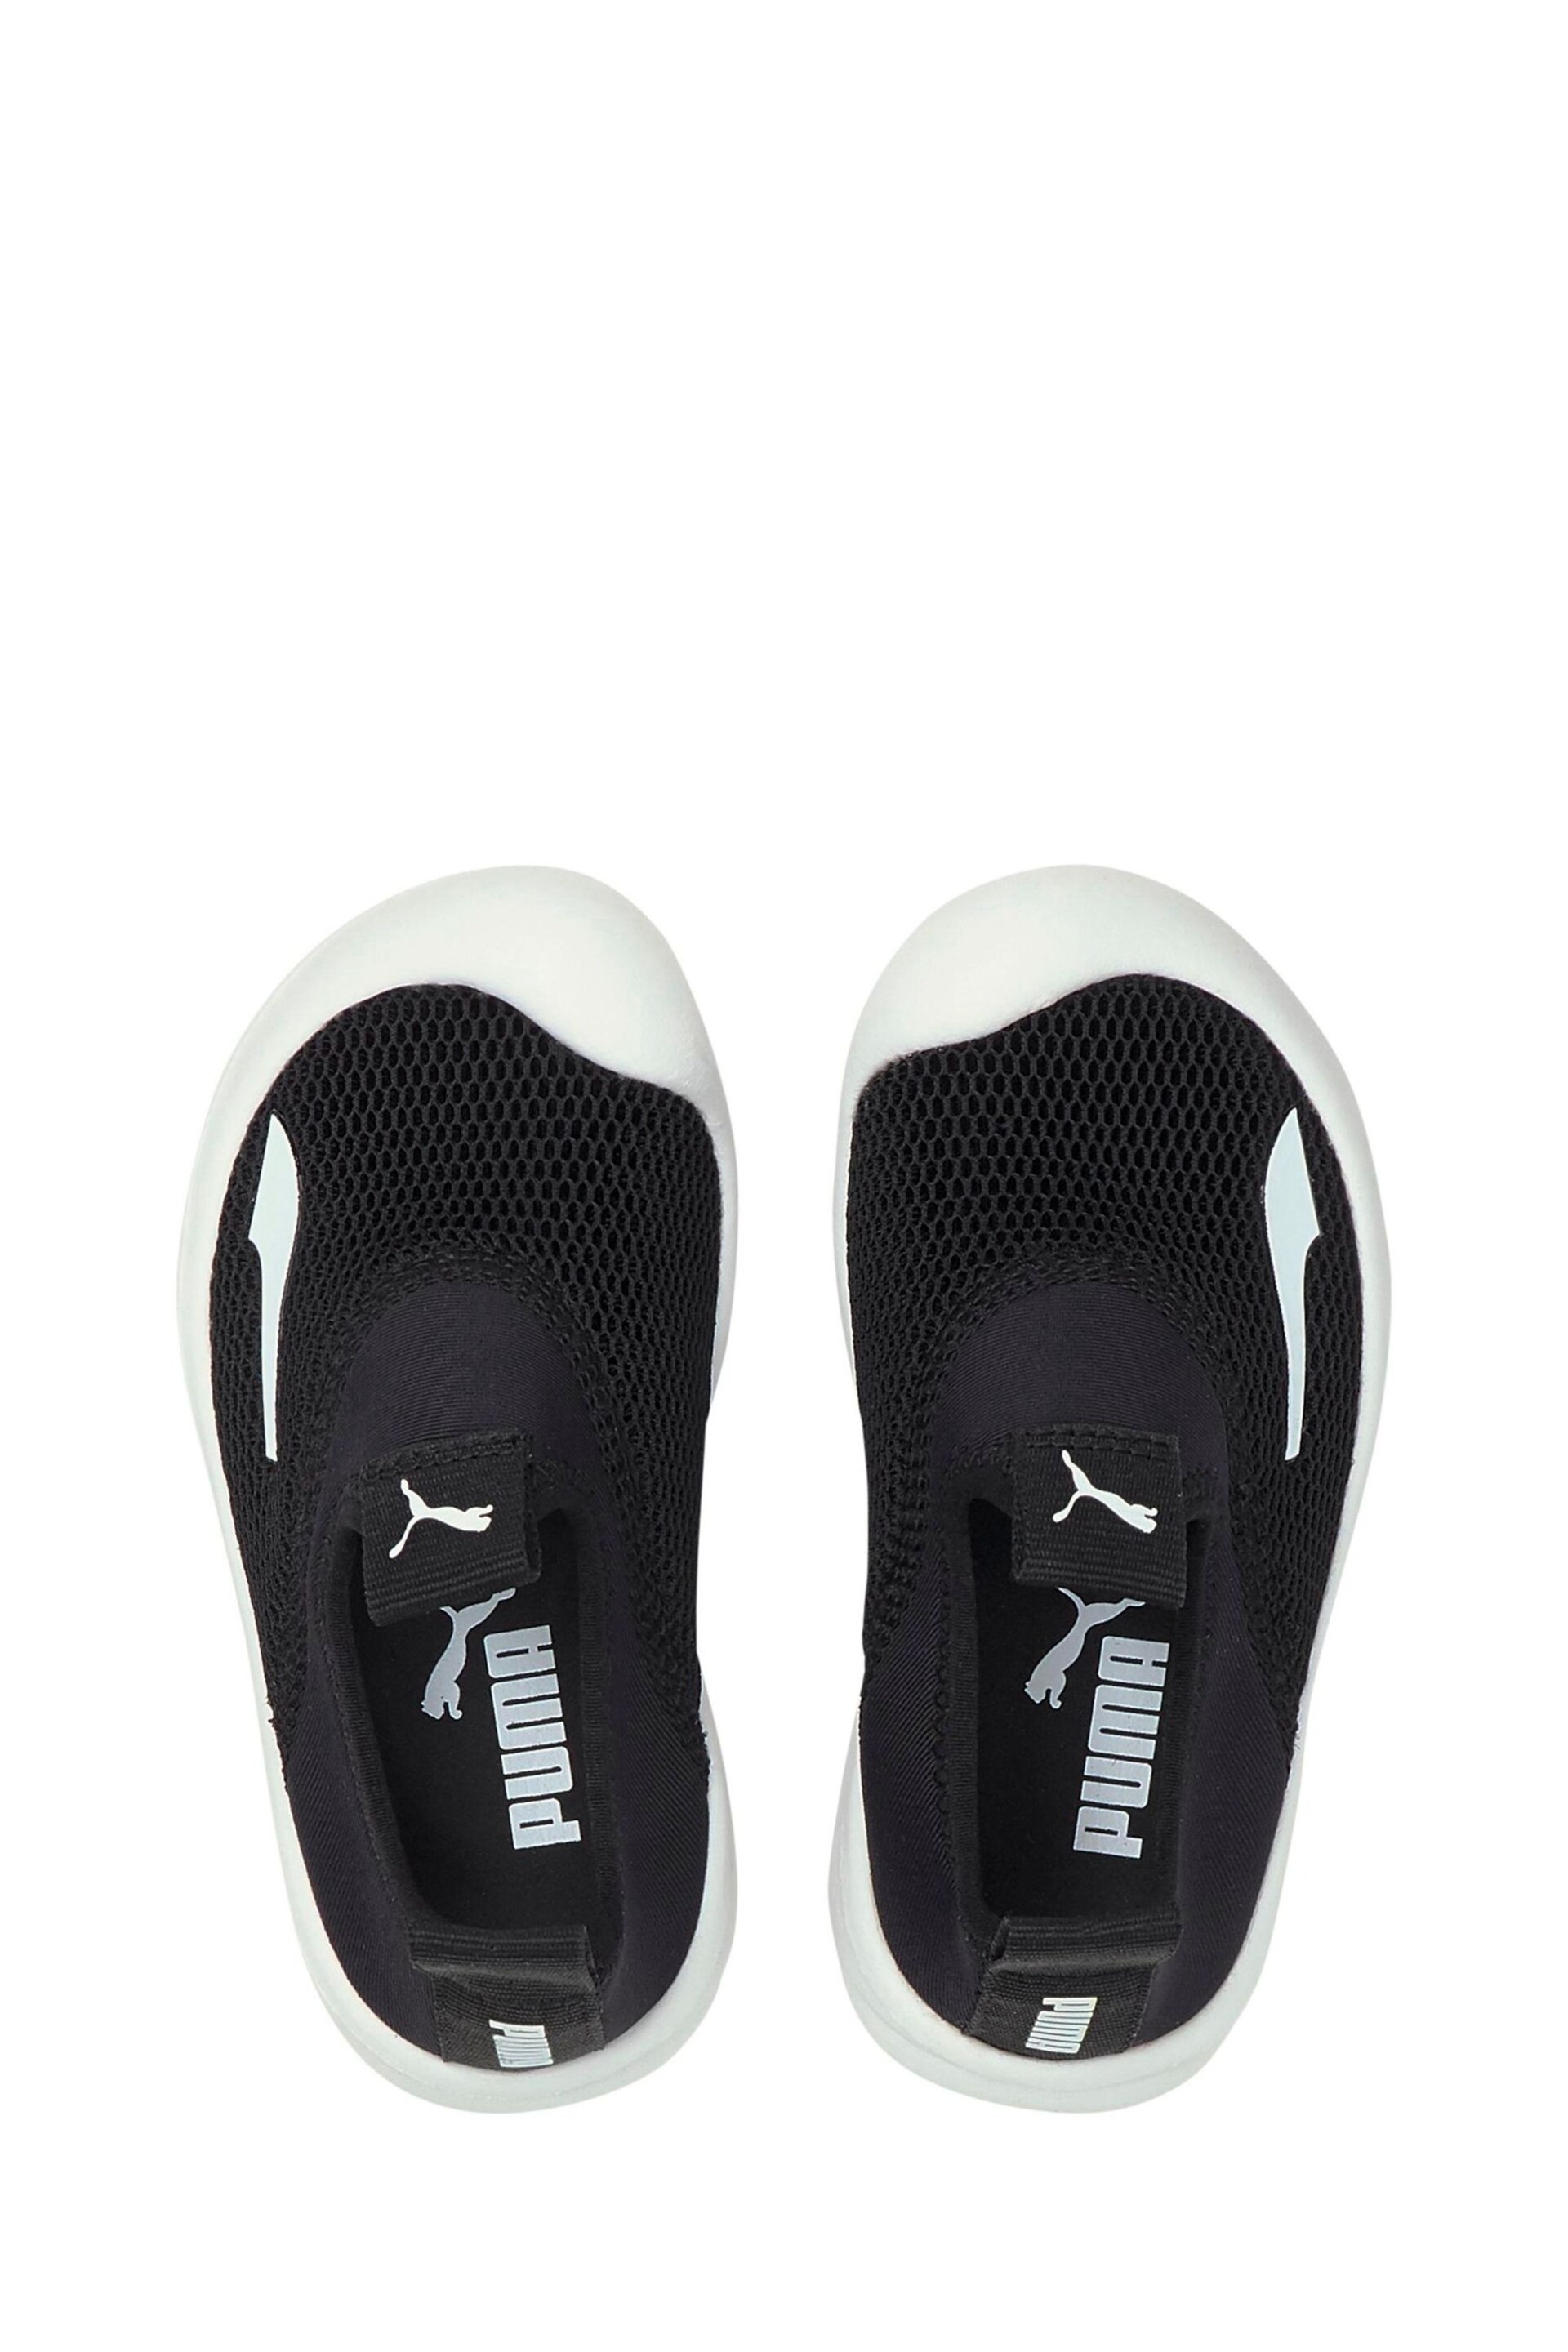 Puma Black Baby Aquacat Shield Unisex Sandals - Image 4 of 6